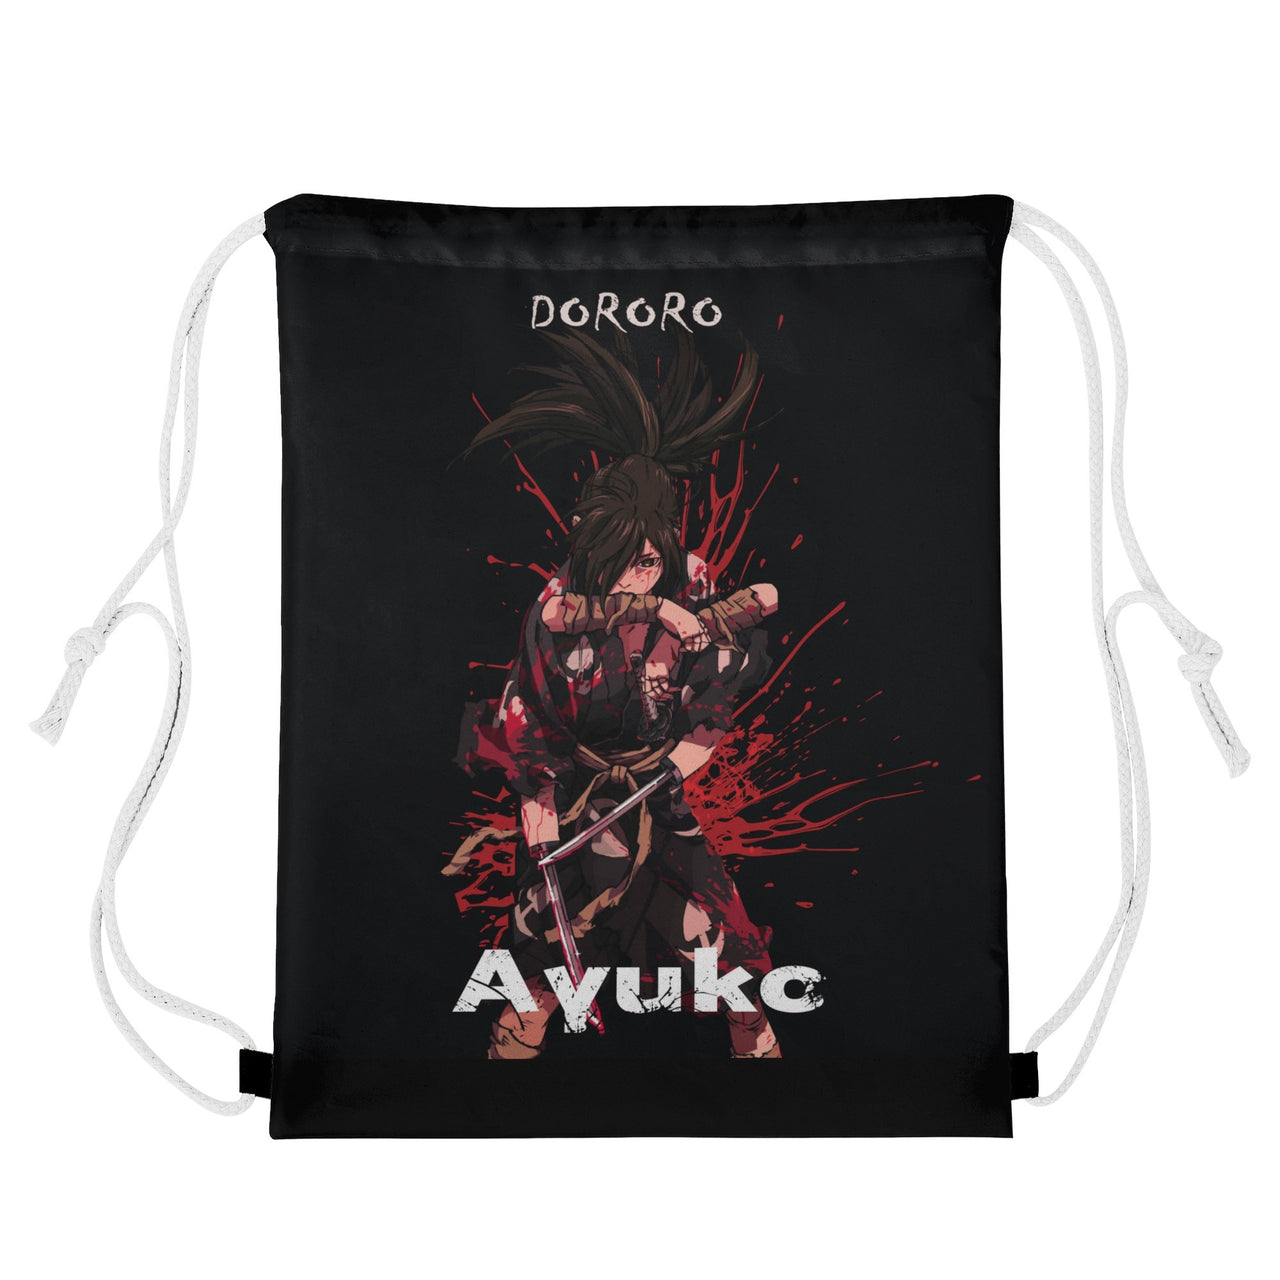 Dororo Anime Drawstring Bag